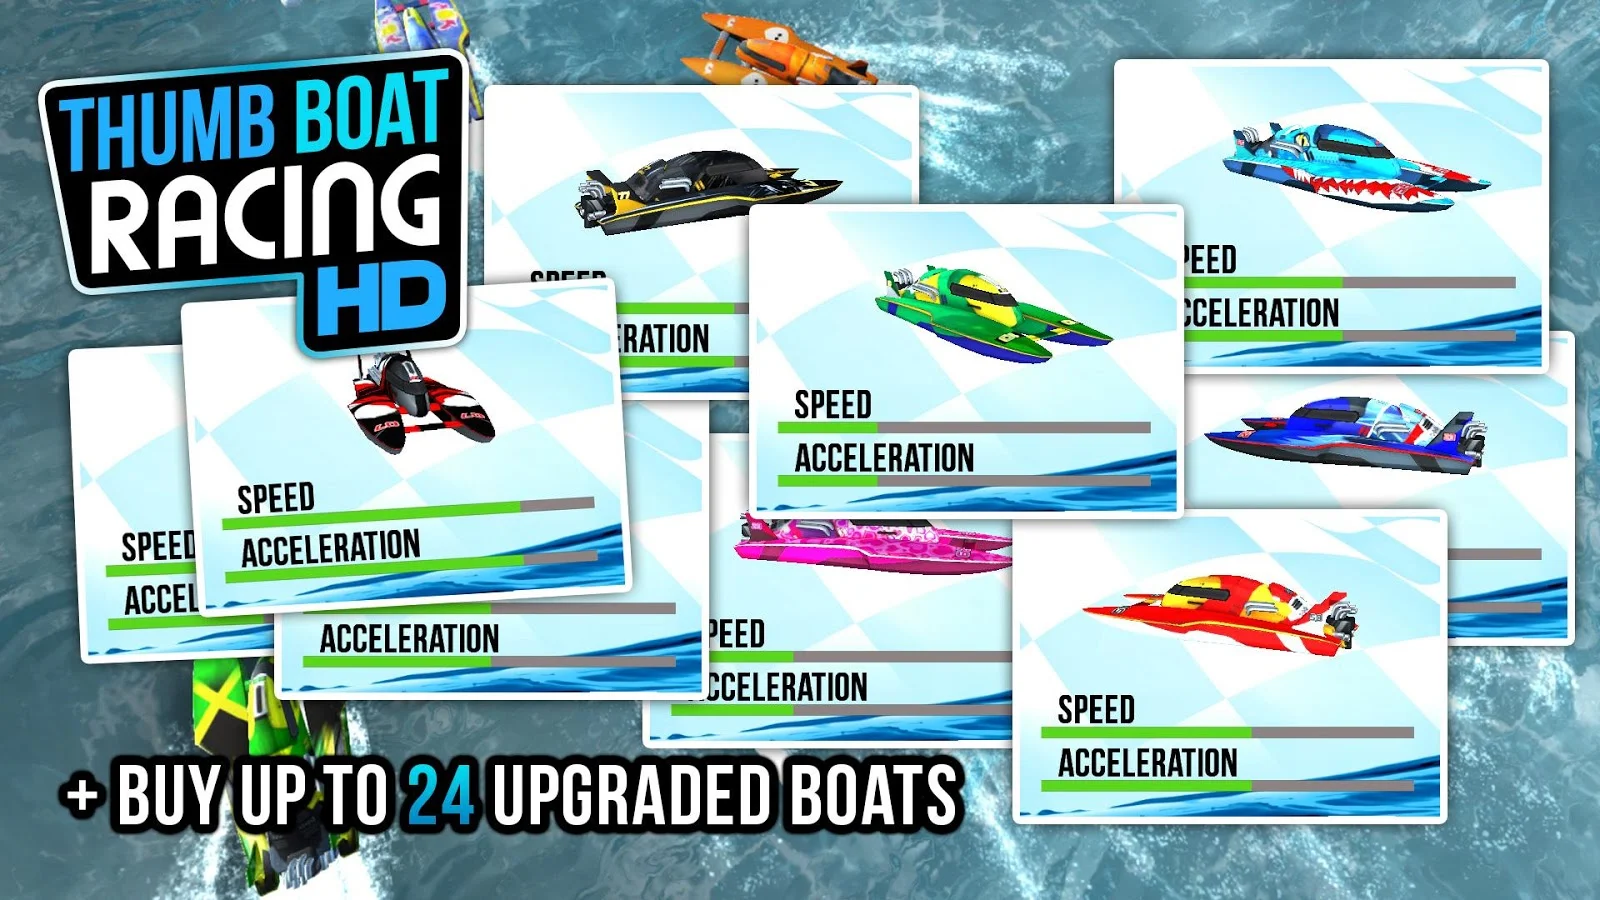 Thumb Boat Racing - Screenshot